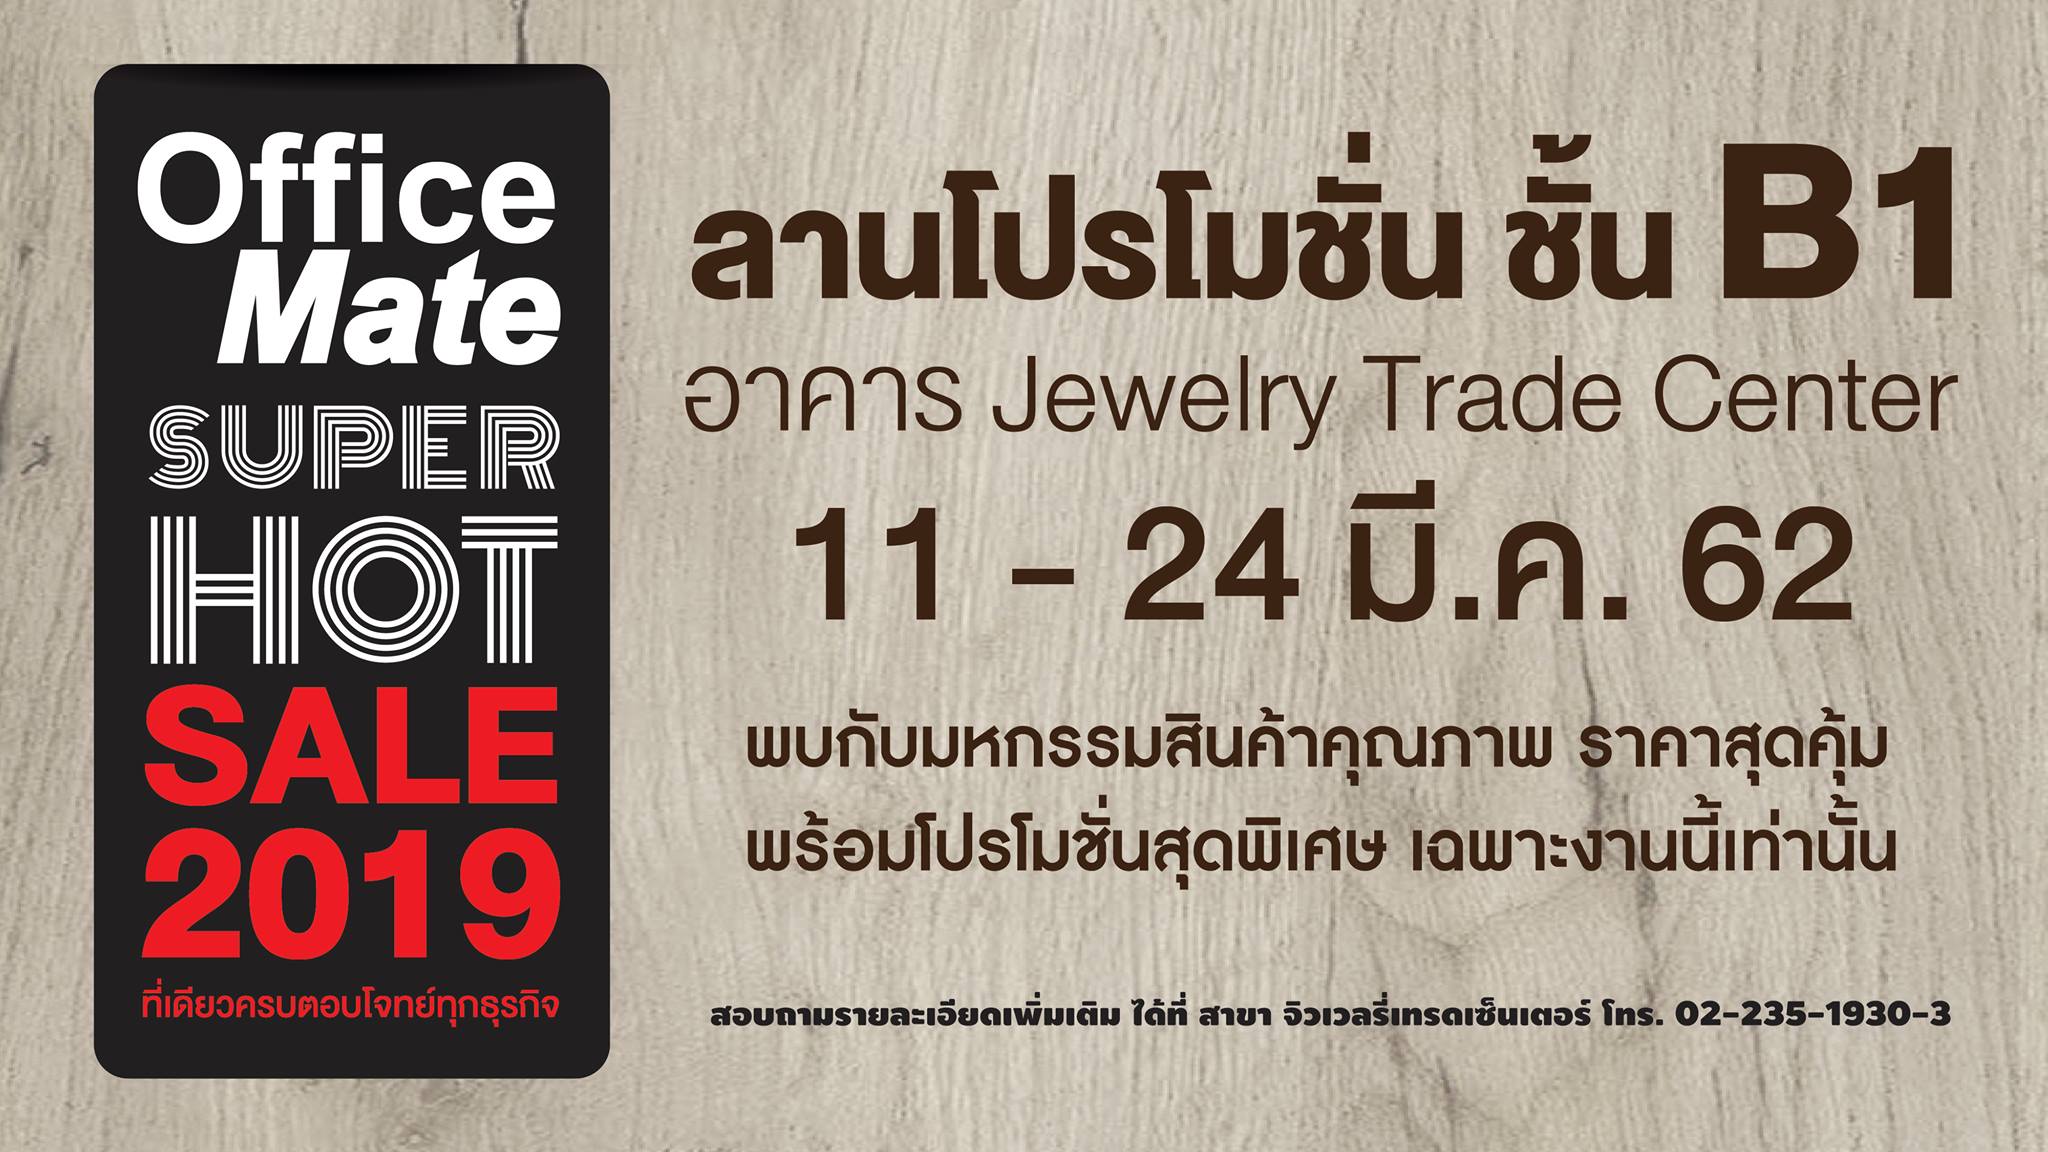 OfficeMate Super Hot Sale @Jewelry Trade Center Bangkok